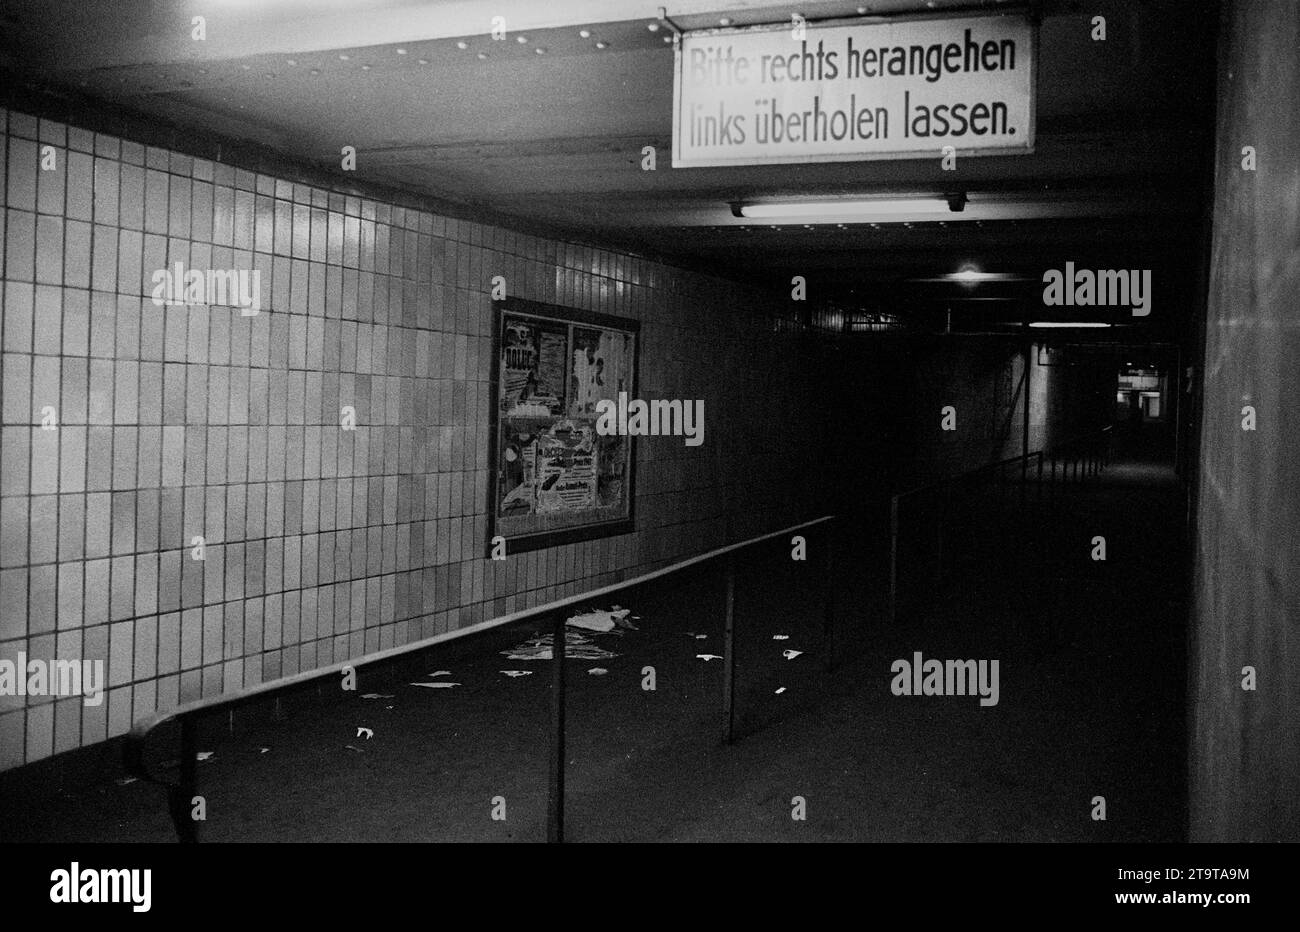 Geisterbahnhöfe DDR, Berlino, 29.5,1990, U-Bahnhof Stadtmitte, heute U 6, Reklame, 28 Jahre gesperrt: Verbindungsgang zwischen den Bahnsteigen der heutigen U6 und der U2, die sich hier kreuzen, Bitte rechts herangehen, links überholen lassen, Â *** Ghost Stations GDR, Berlino, 29 5 1990, U station Stadtmitte, Today U 6, pubblicità, 28 anni chiuso corridoio di collegamento tra le piattaforme di oggi U6 e U2, che attraversano qui, si prega di avvicinarsi a destra, lasciare sorpasso a sinistra, Â Credit: Imago/Alamy Live News Foto Stock